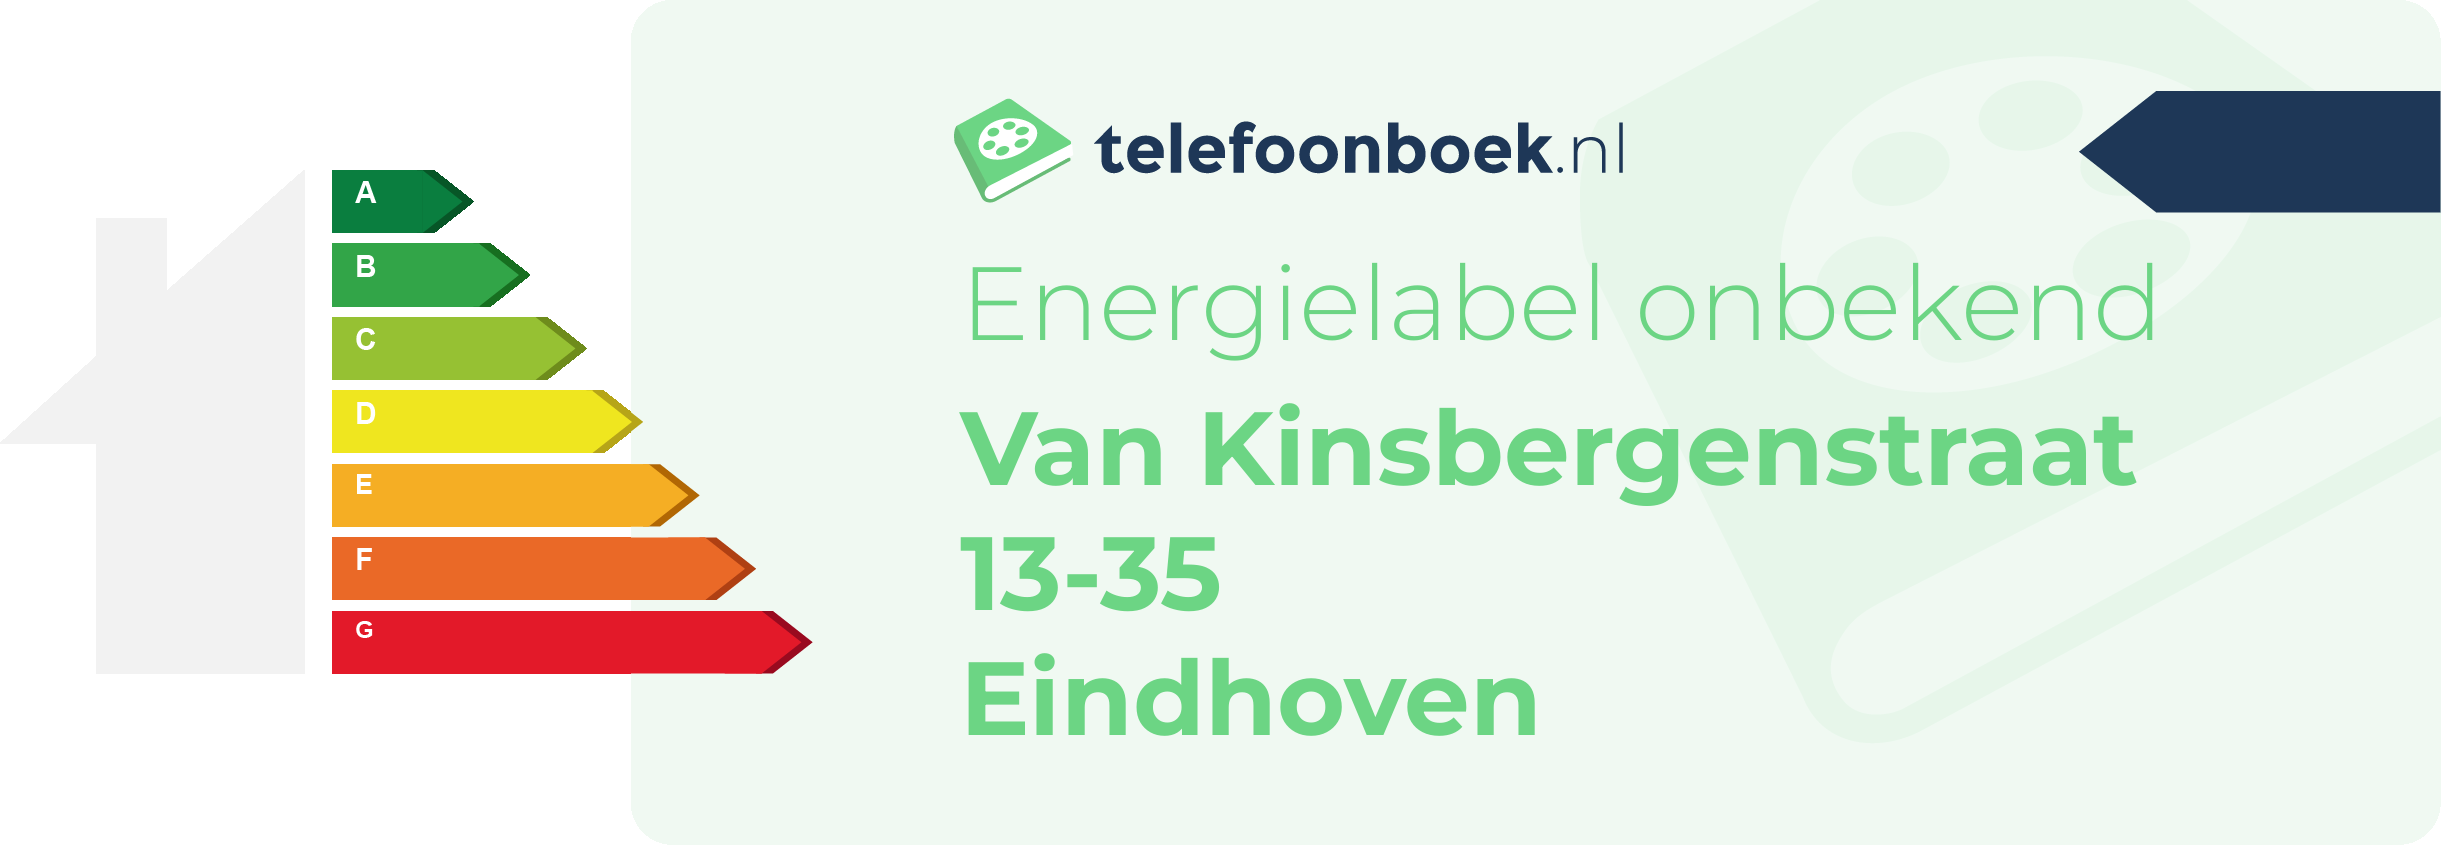 Energielabel Van Kinsbergenstraat 13-35 Eindhoven